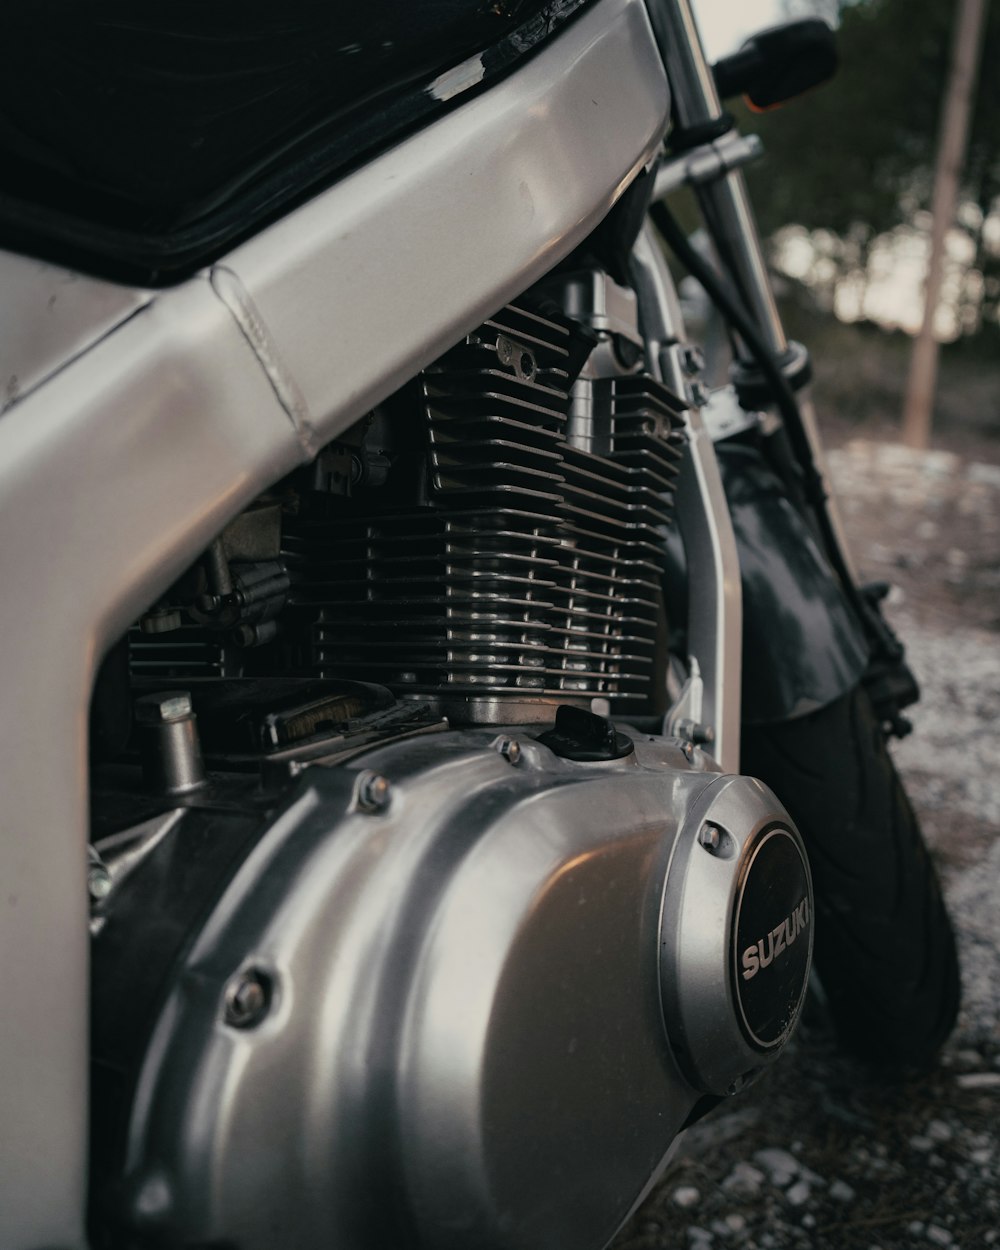 gray Suzuki motorcycle engine